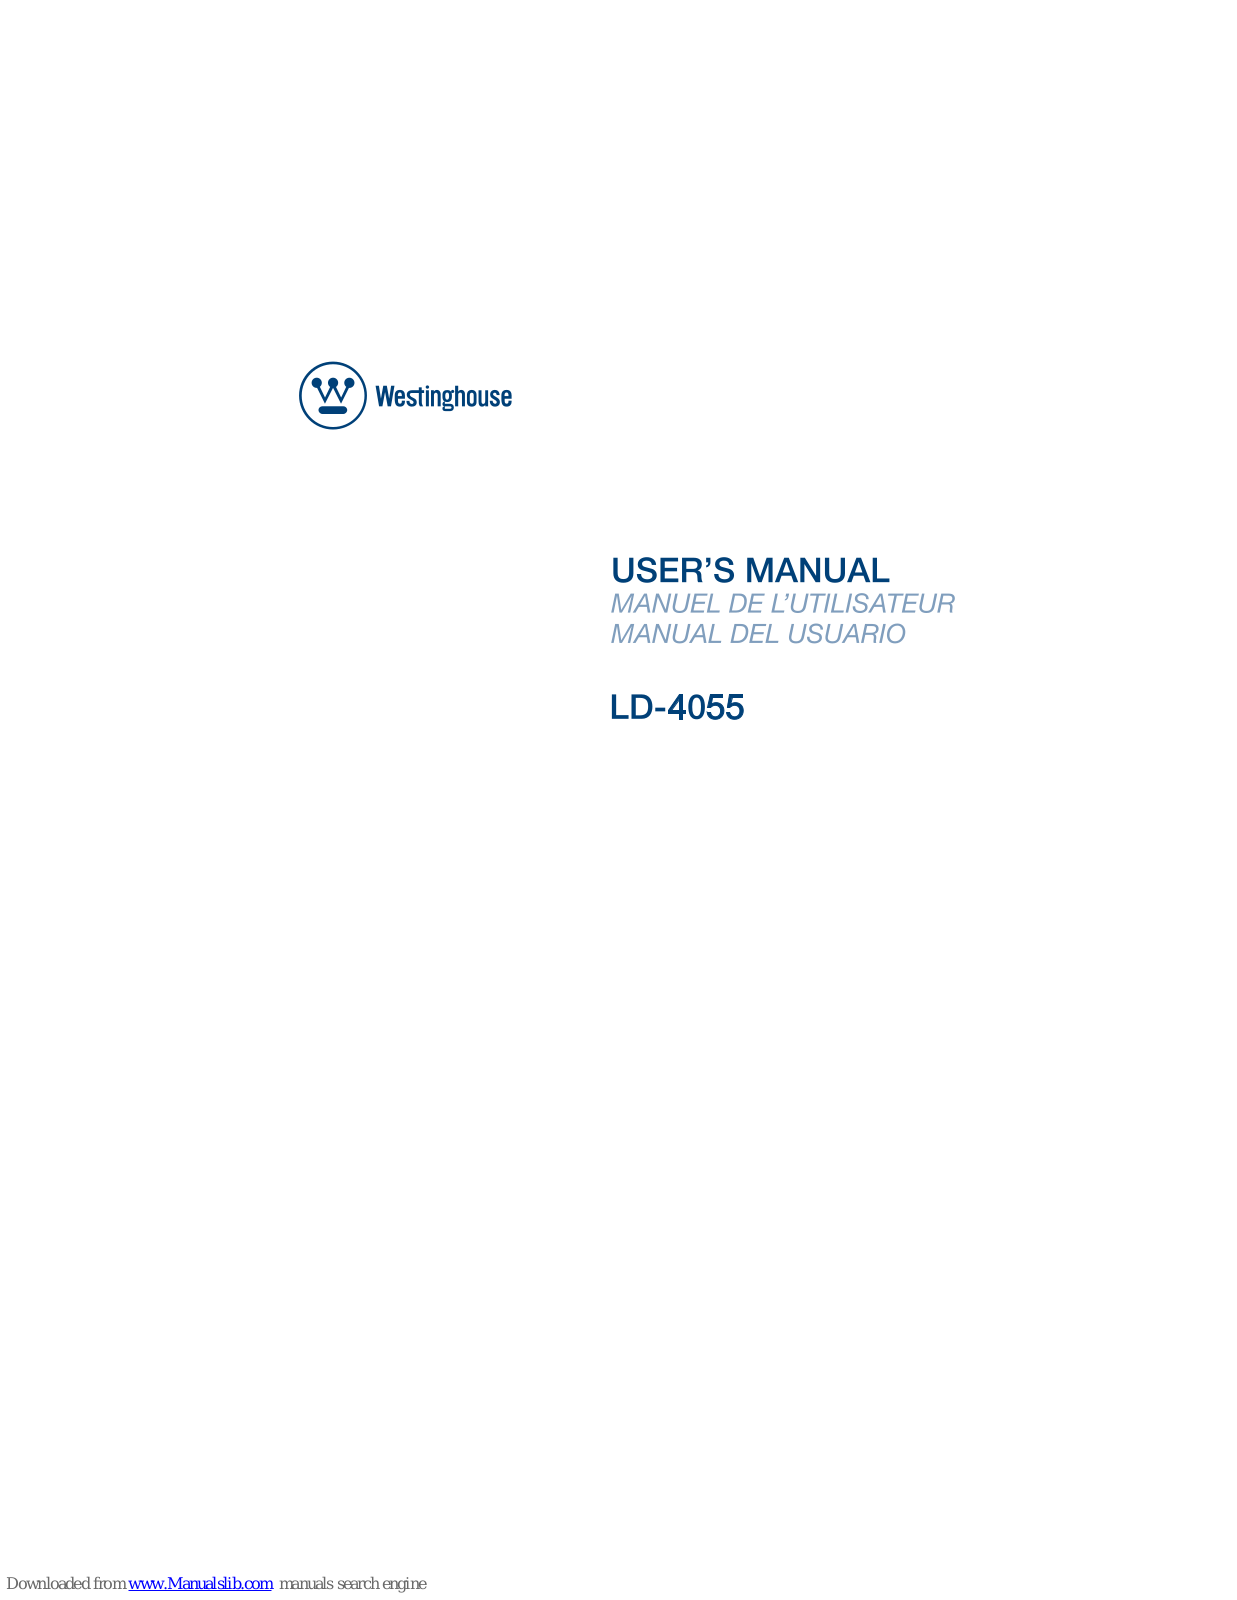 Westinghouse LD-4055 User Manual